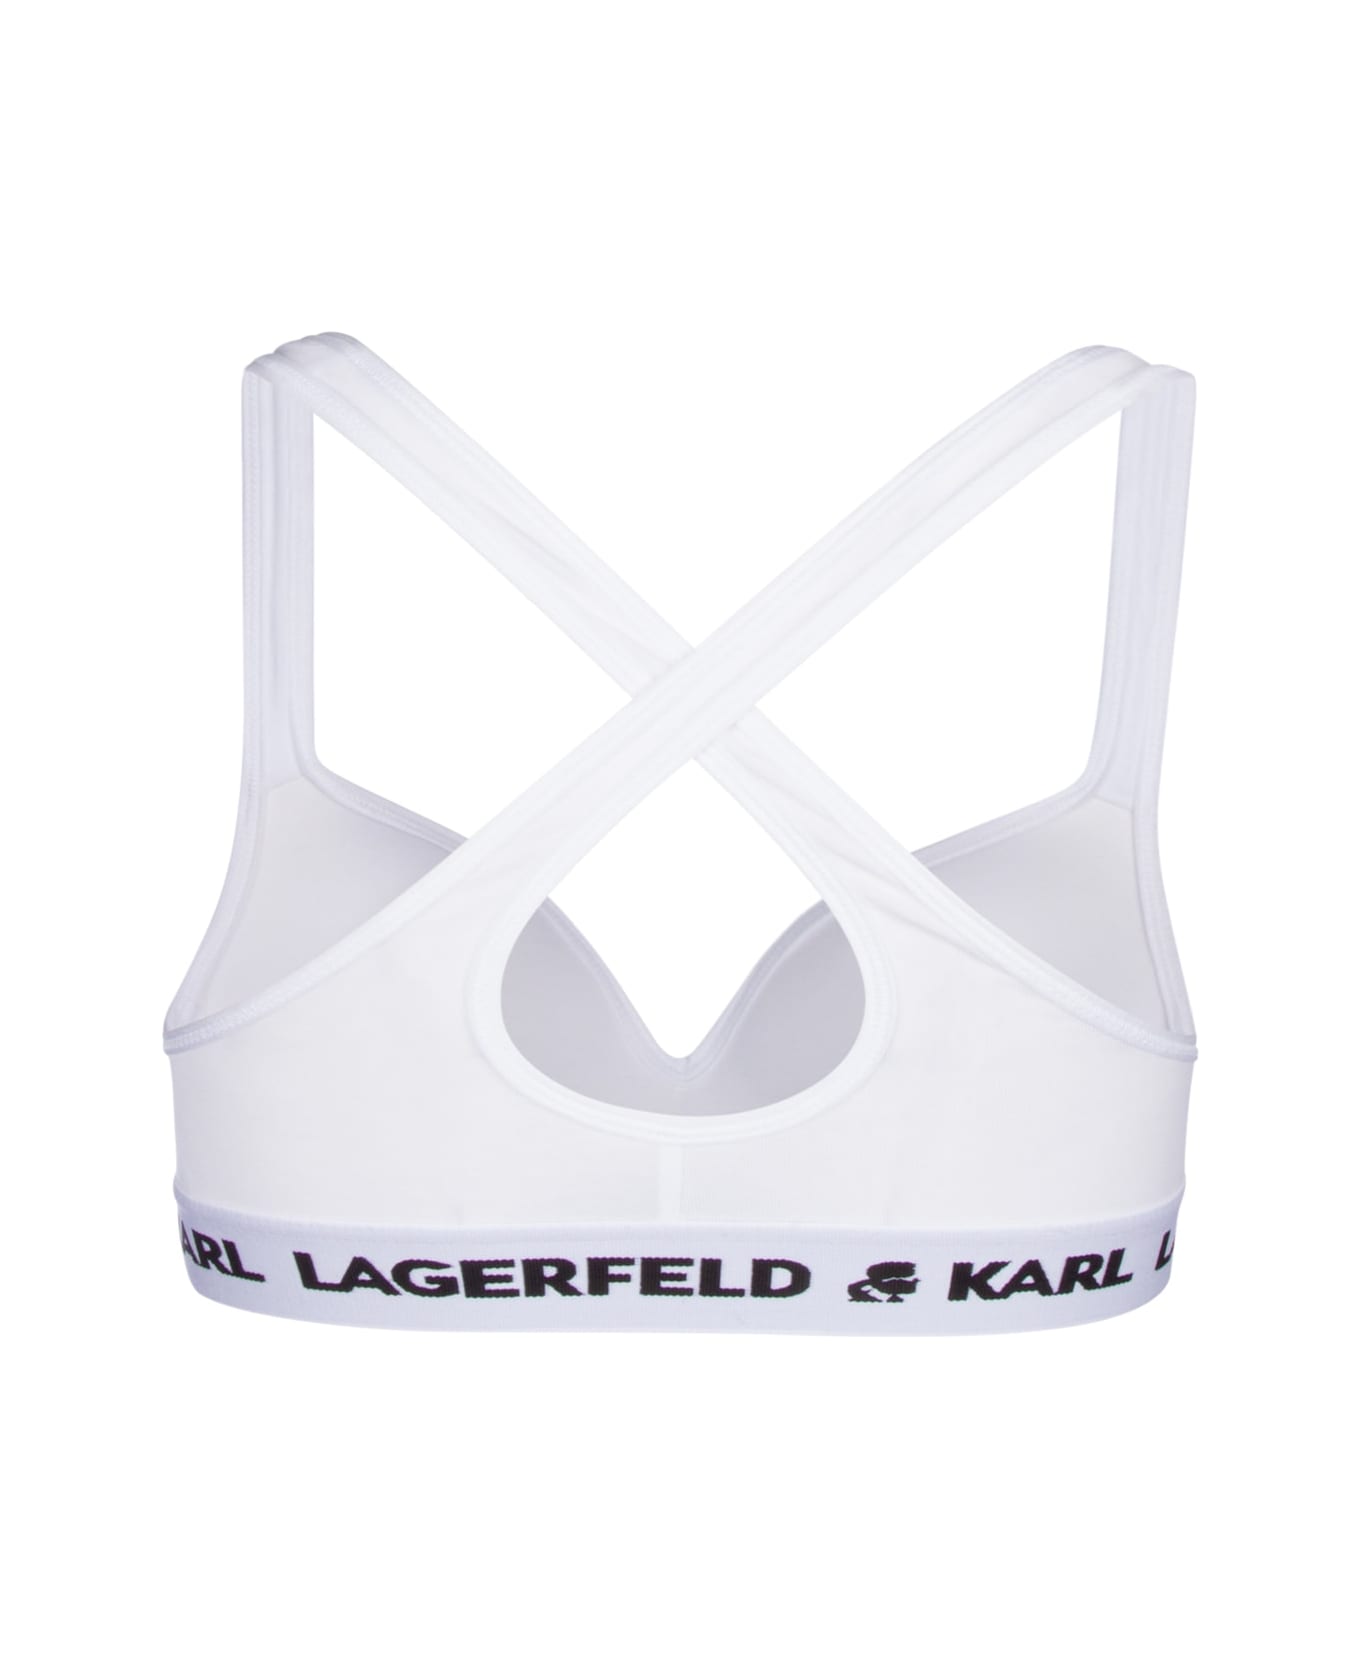 Karl Lagerfeld Intimo - 100